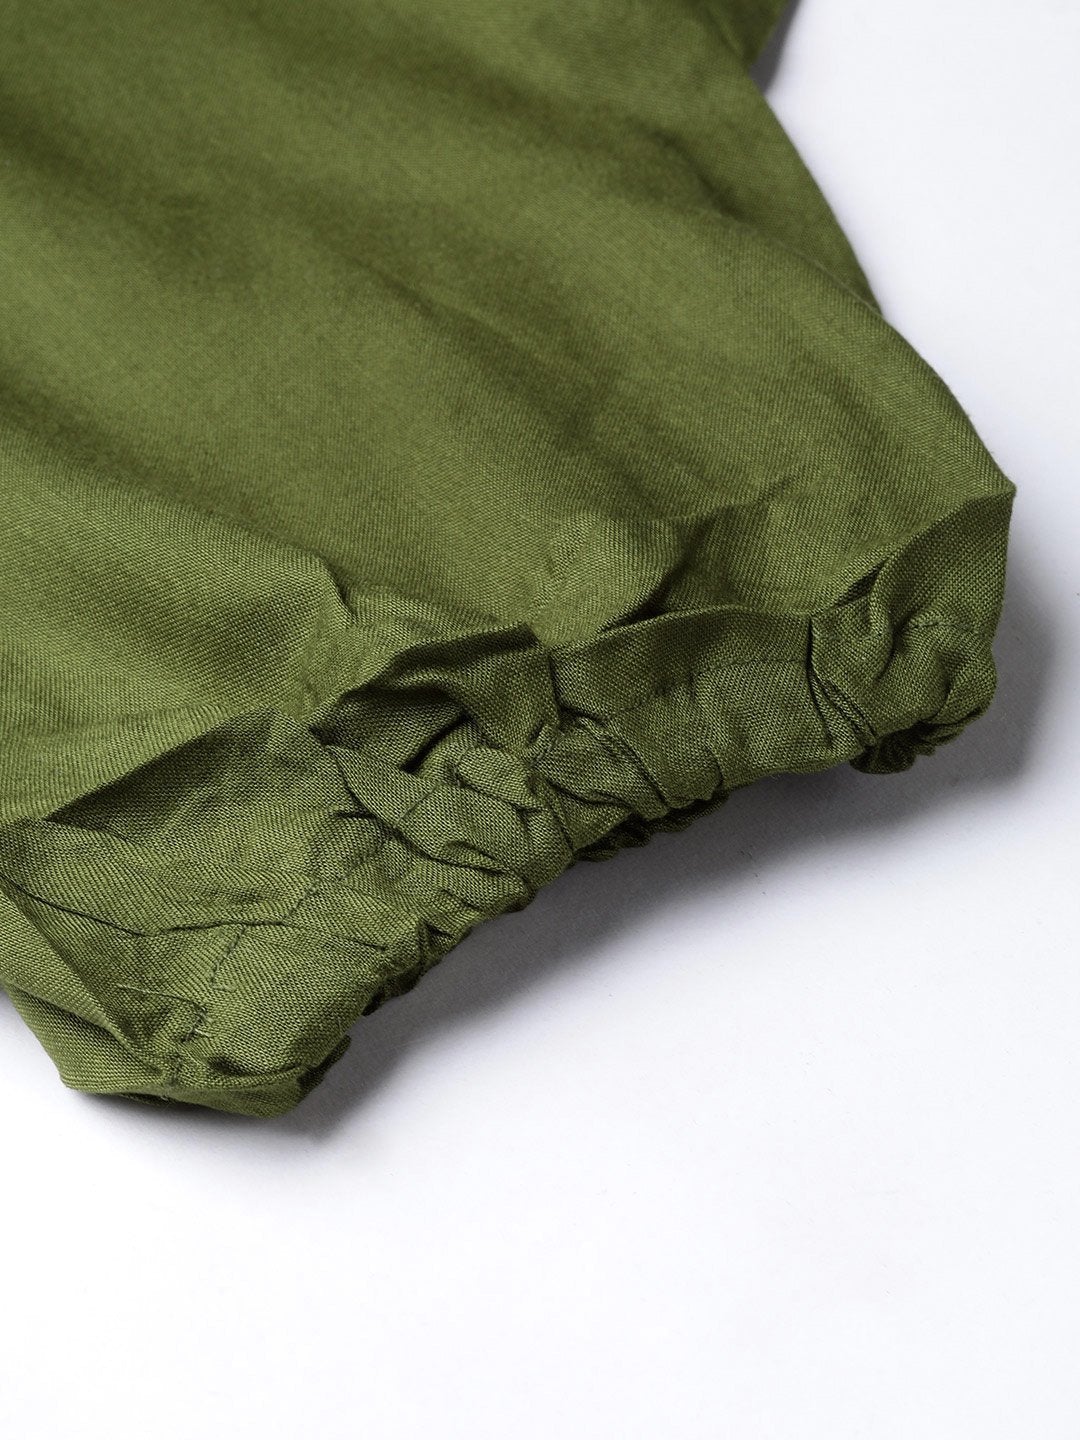 Women's Harem Pants - Olive Green - InWeave